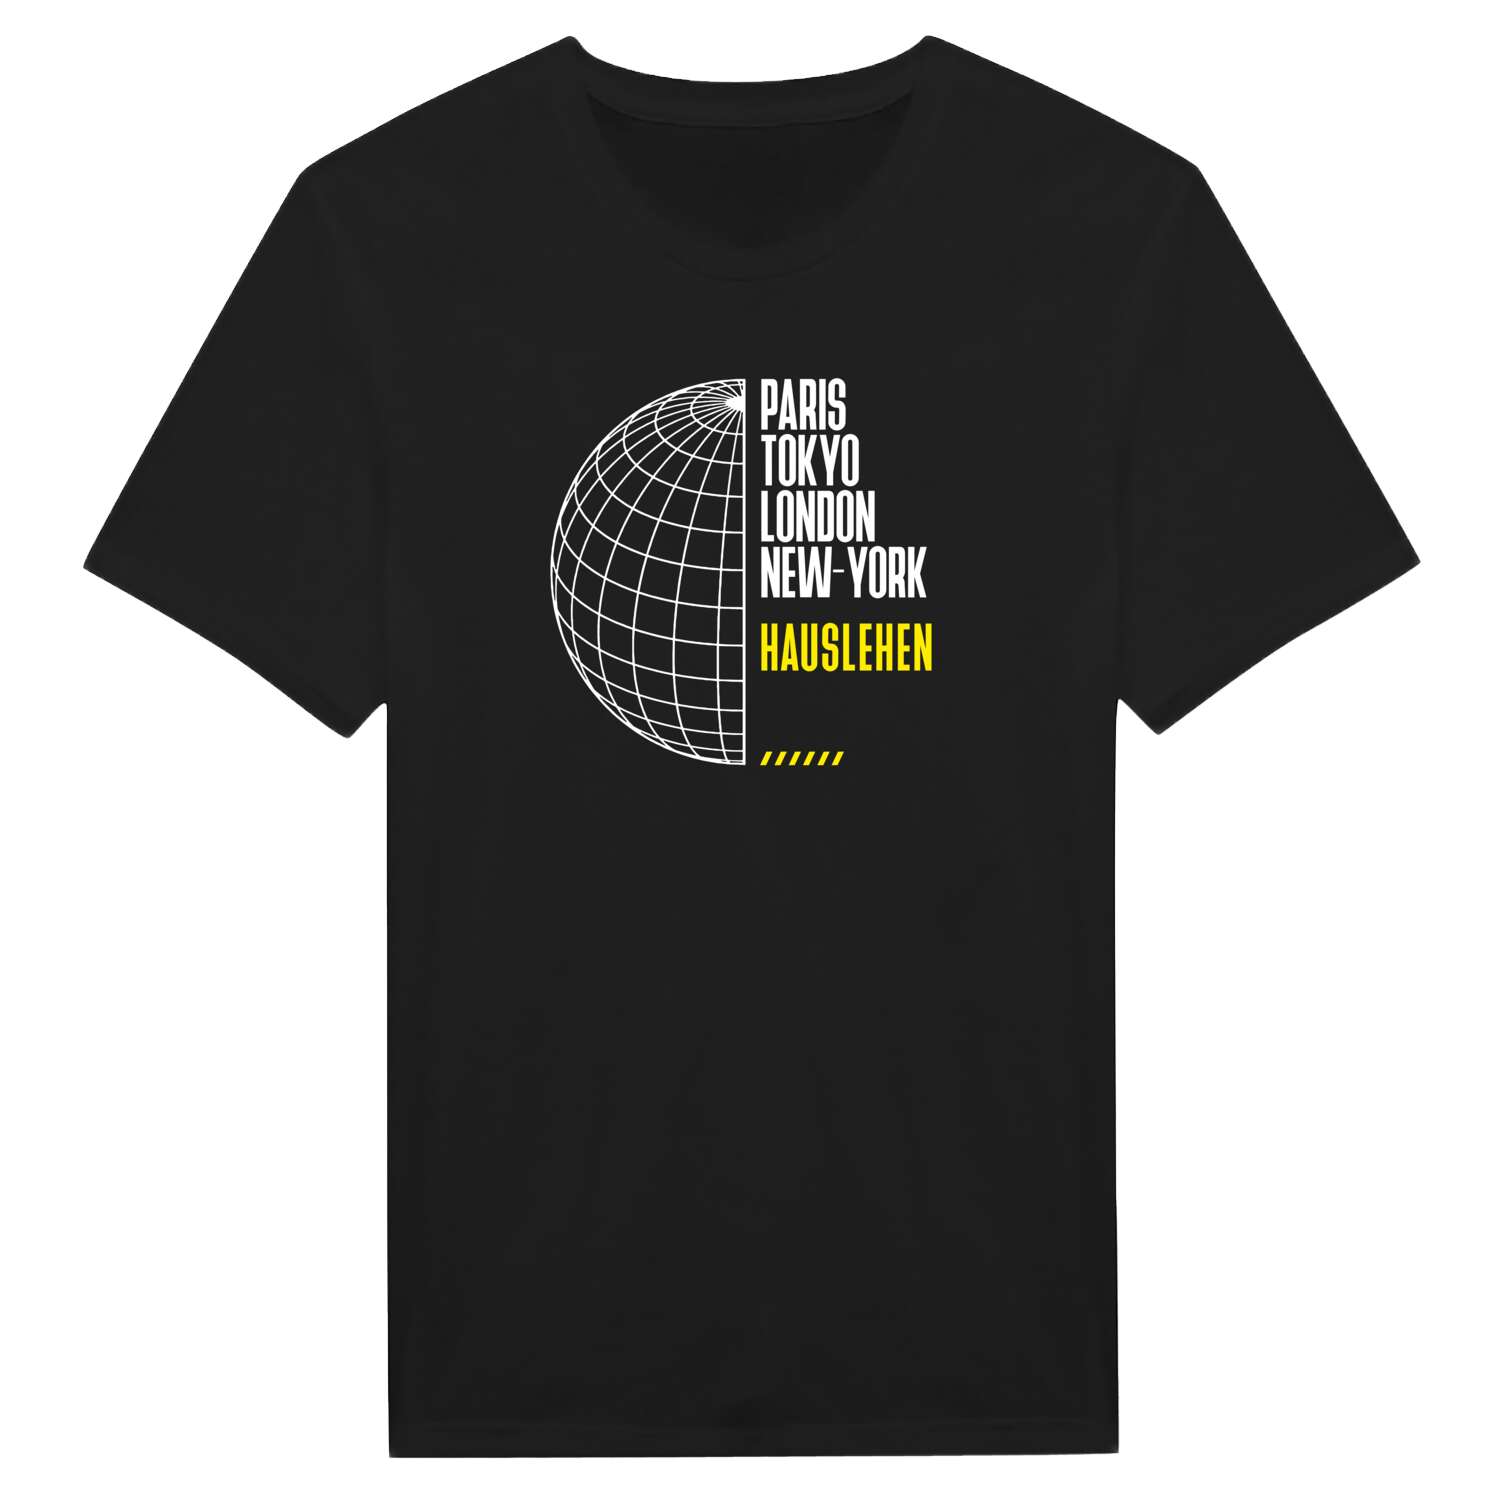 Hauslehen T-Shirt »Paris Tokyo London«